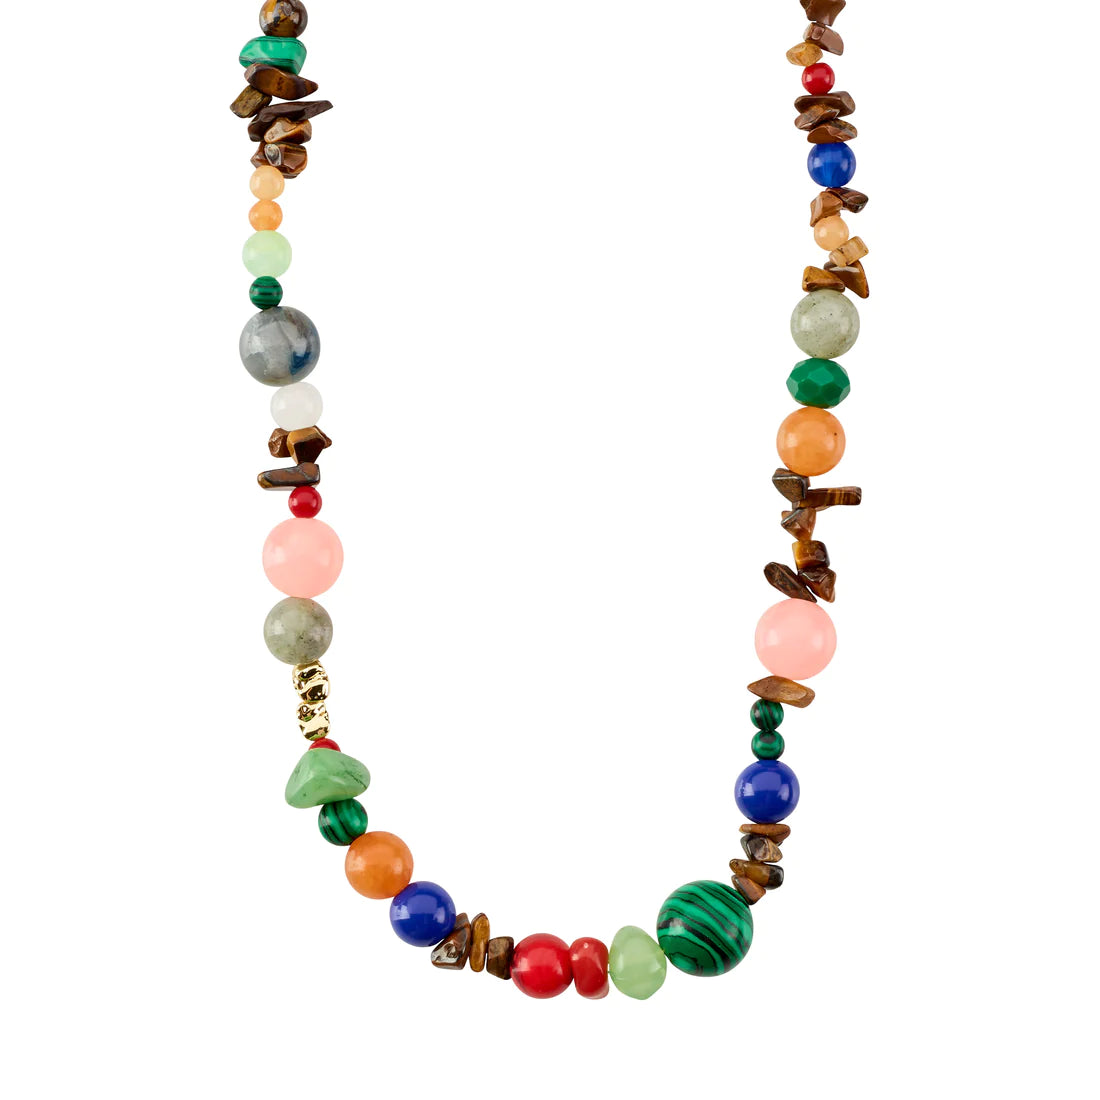 Pilgrim - Echo Gold & Multi Coloured Necklace